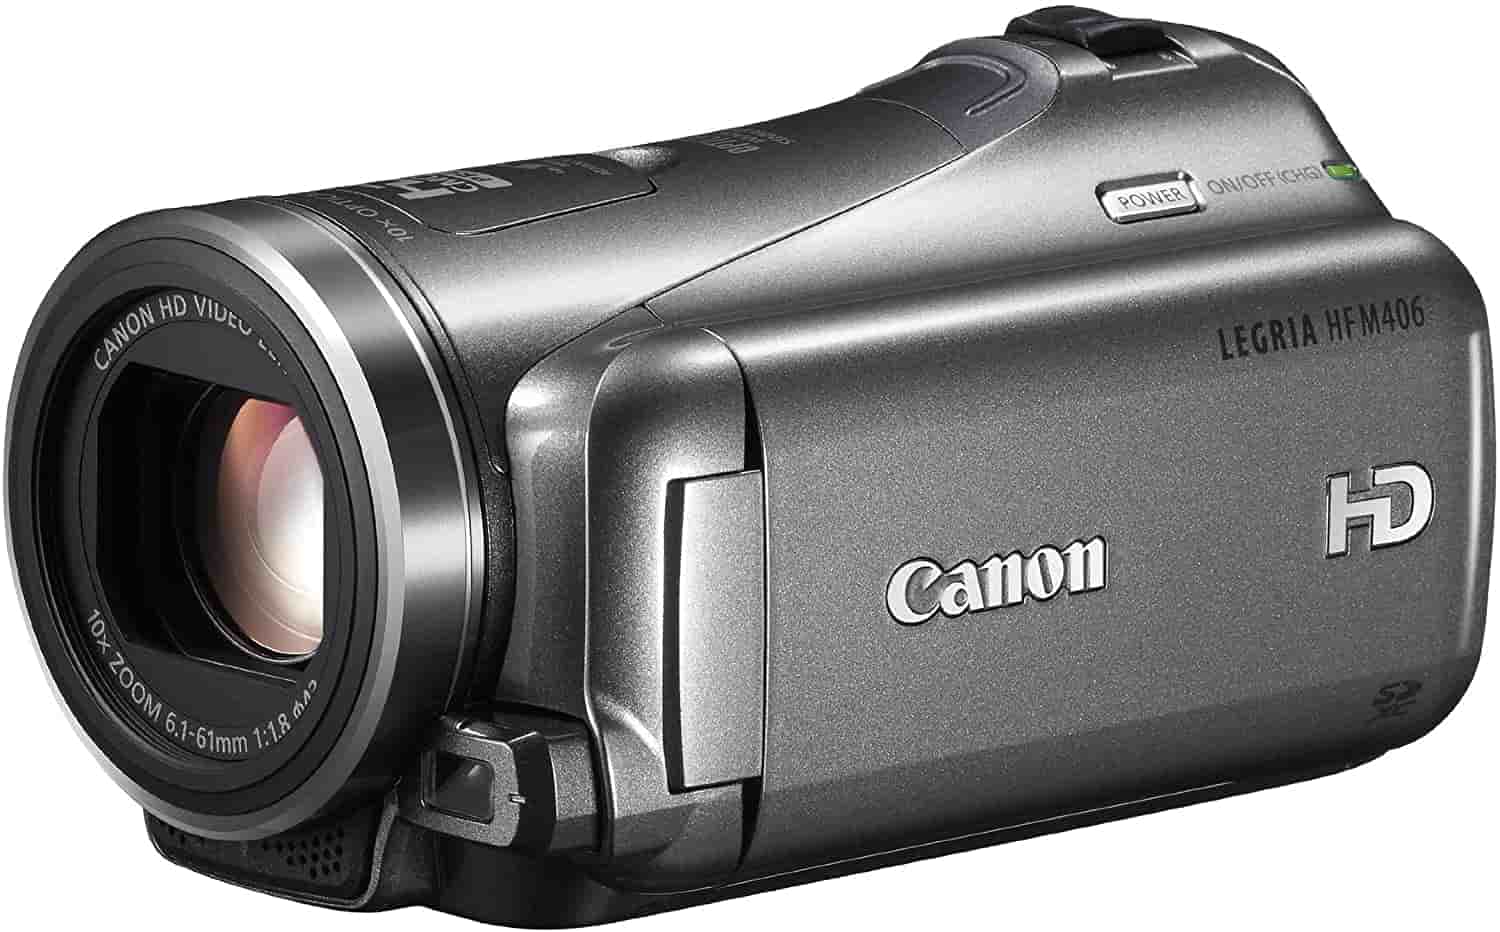 Aquiler cámara Canon Legria M406 xsoaudiovisuals